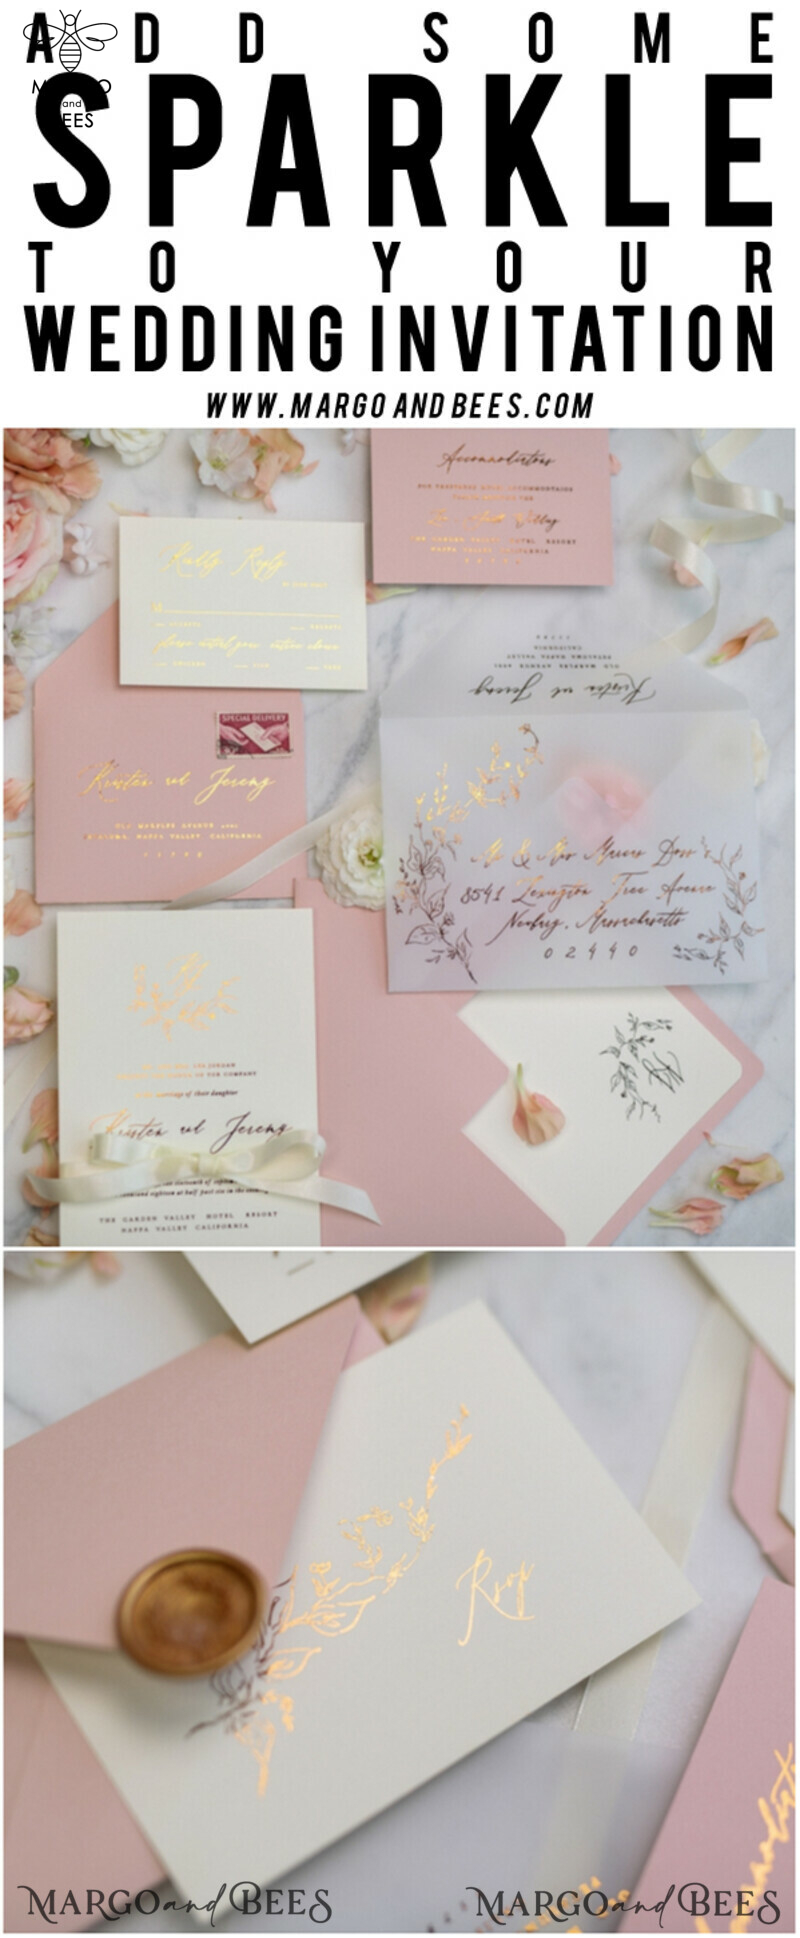 Exquisite Blush Pink and Gold Foil Wedding Invitations: A Unique Vellum Suite for an Elegant Celebration-35